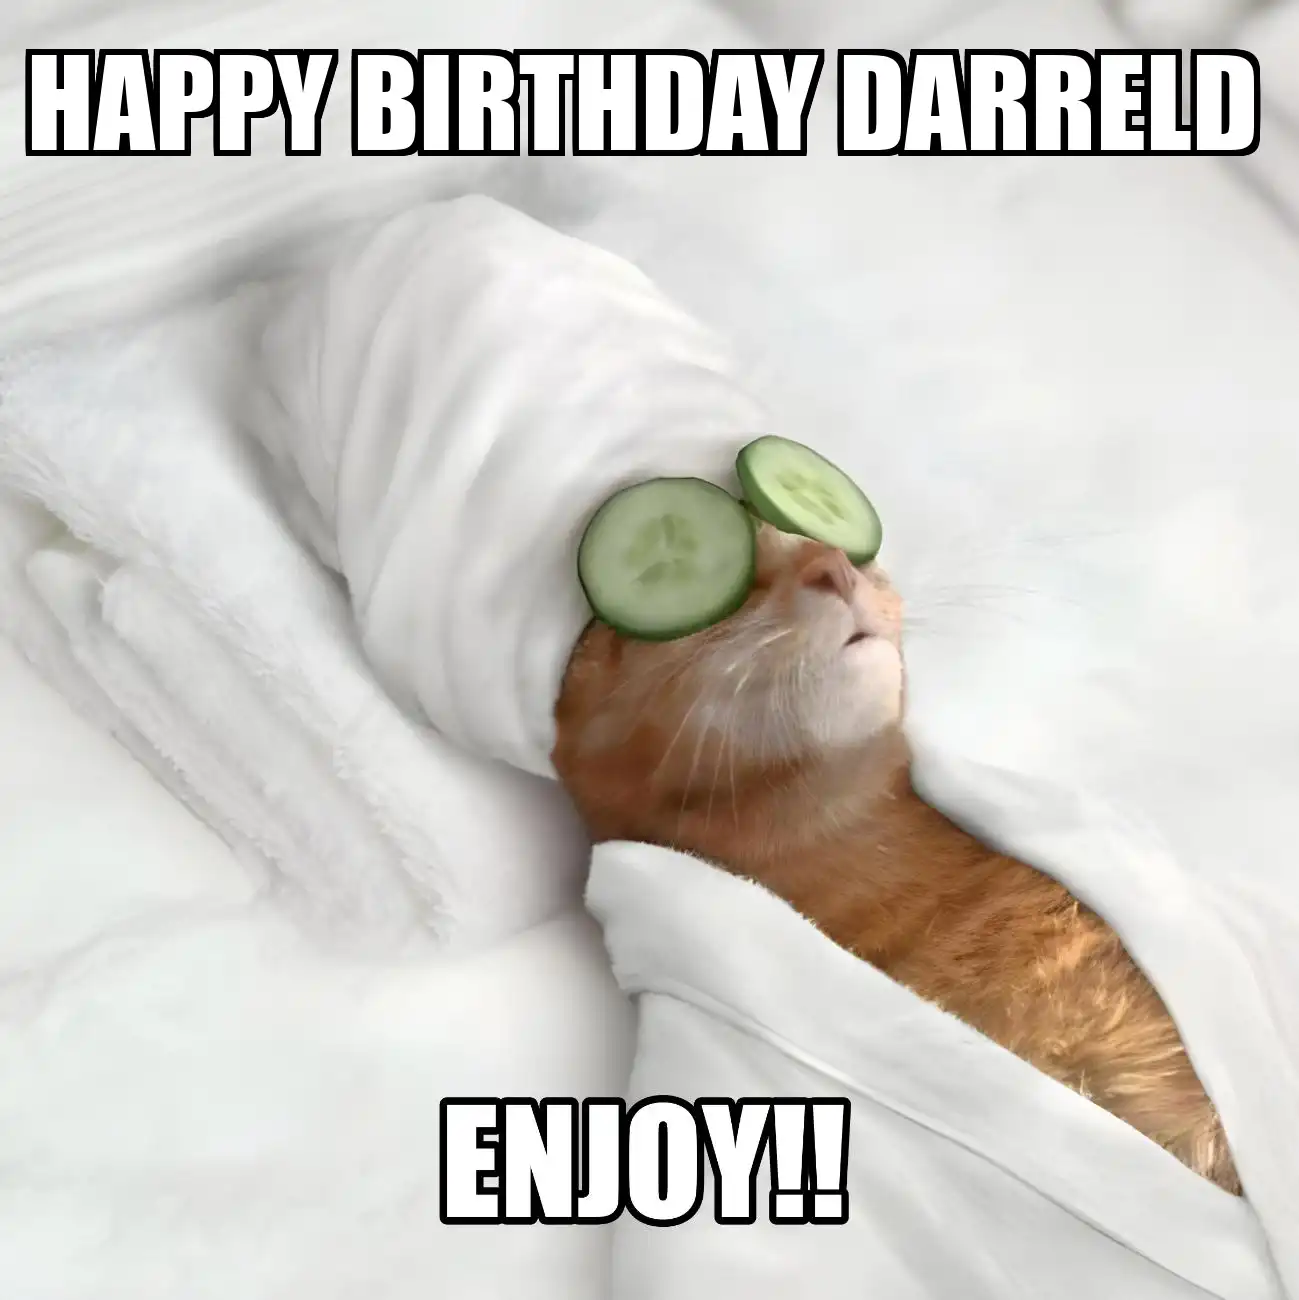 Happy Birthday Darreld Enjoy Cat Meme